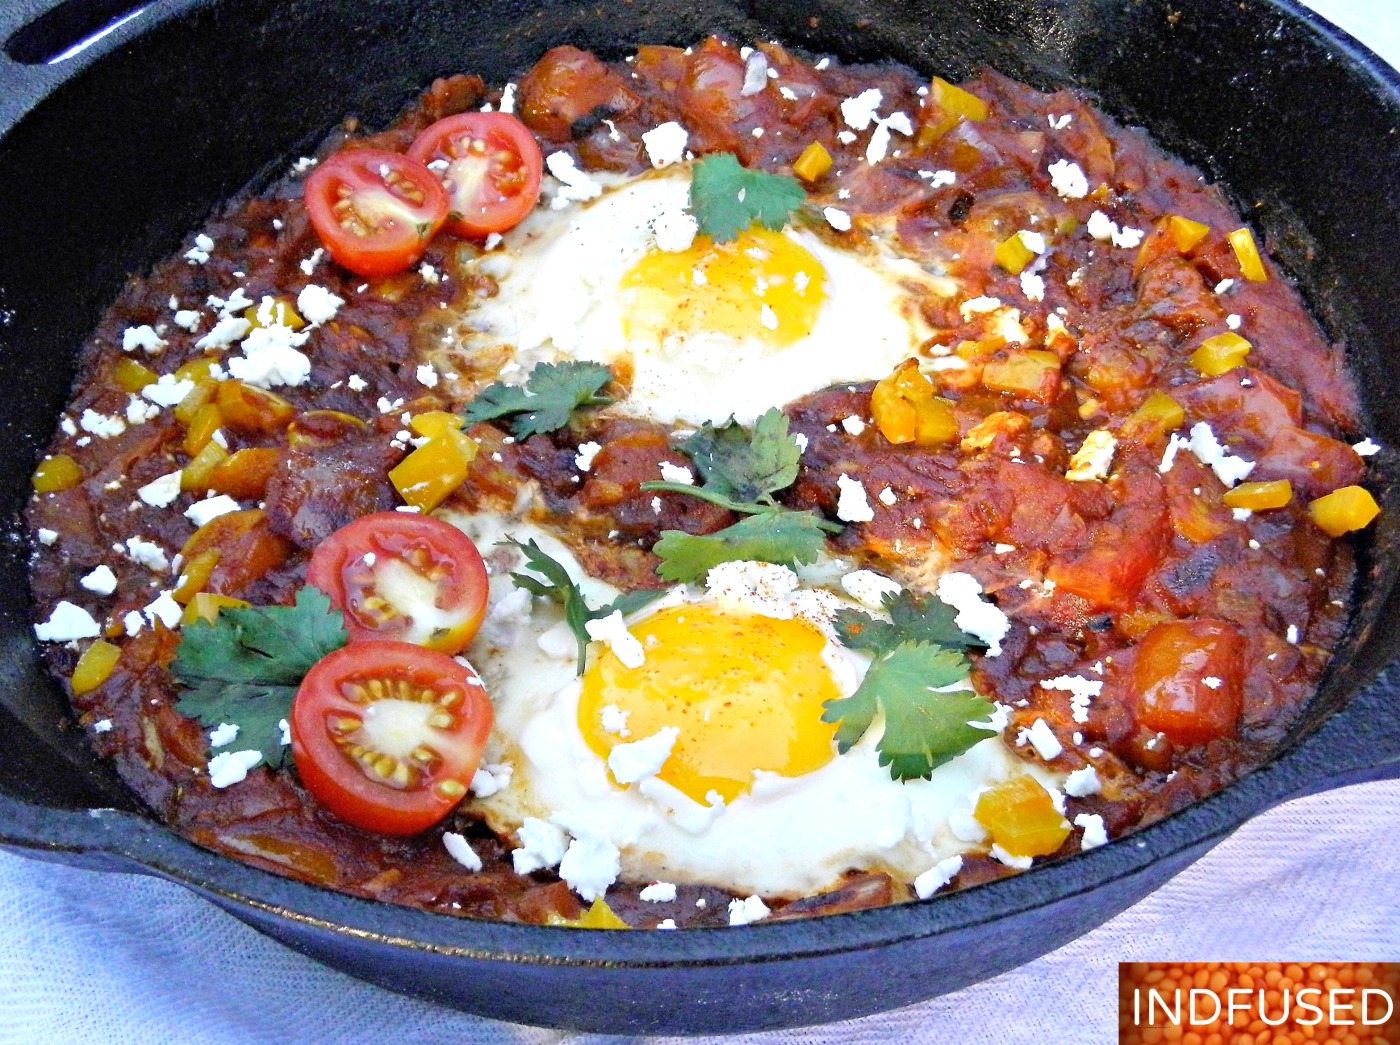 Indian fusion recipe for Shakshuka with #Hunts tomato paste, #MTR garam masala, #eggs, and #Athenos feta cheese